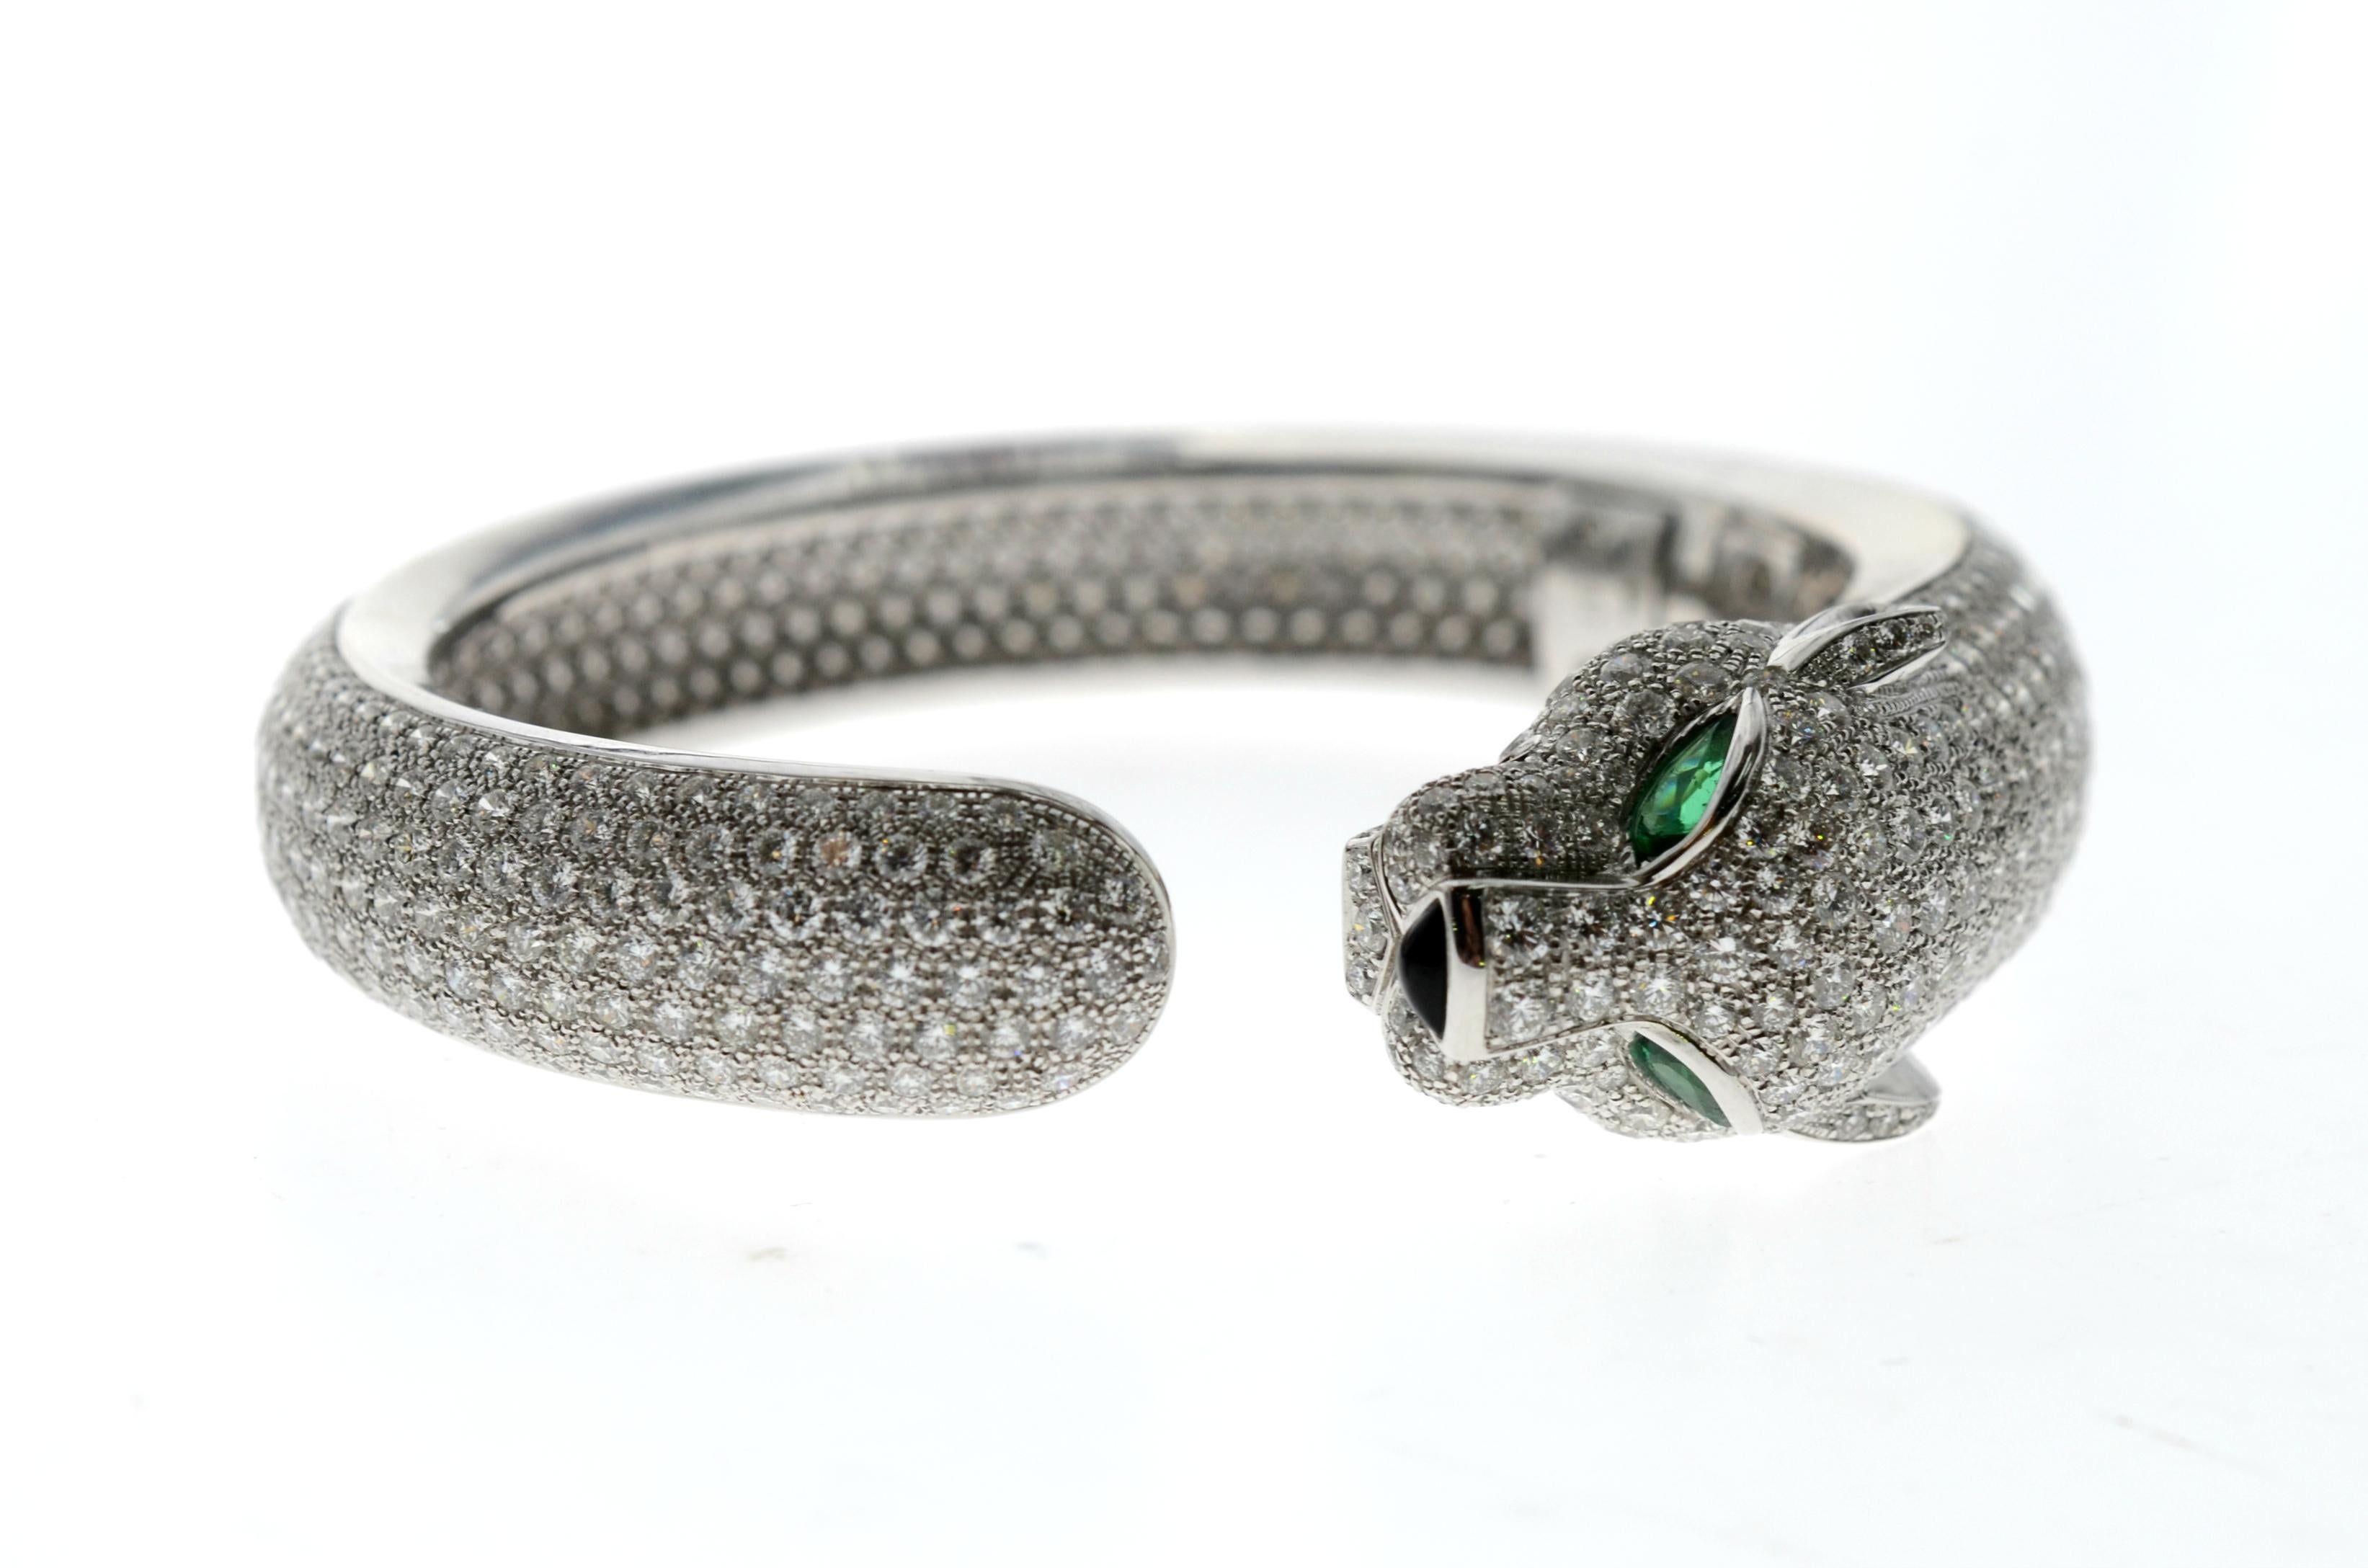 Contemporary Cartier Panthre De Bracelet Pave Diamonds and Emeralds